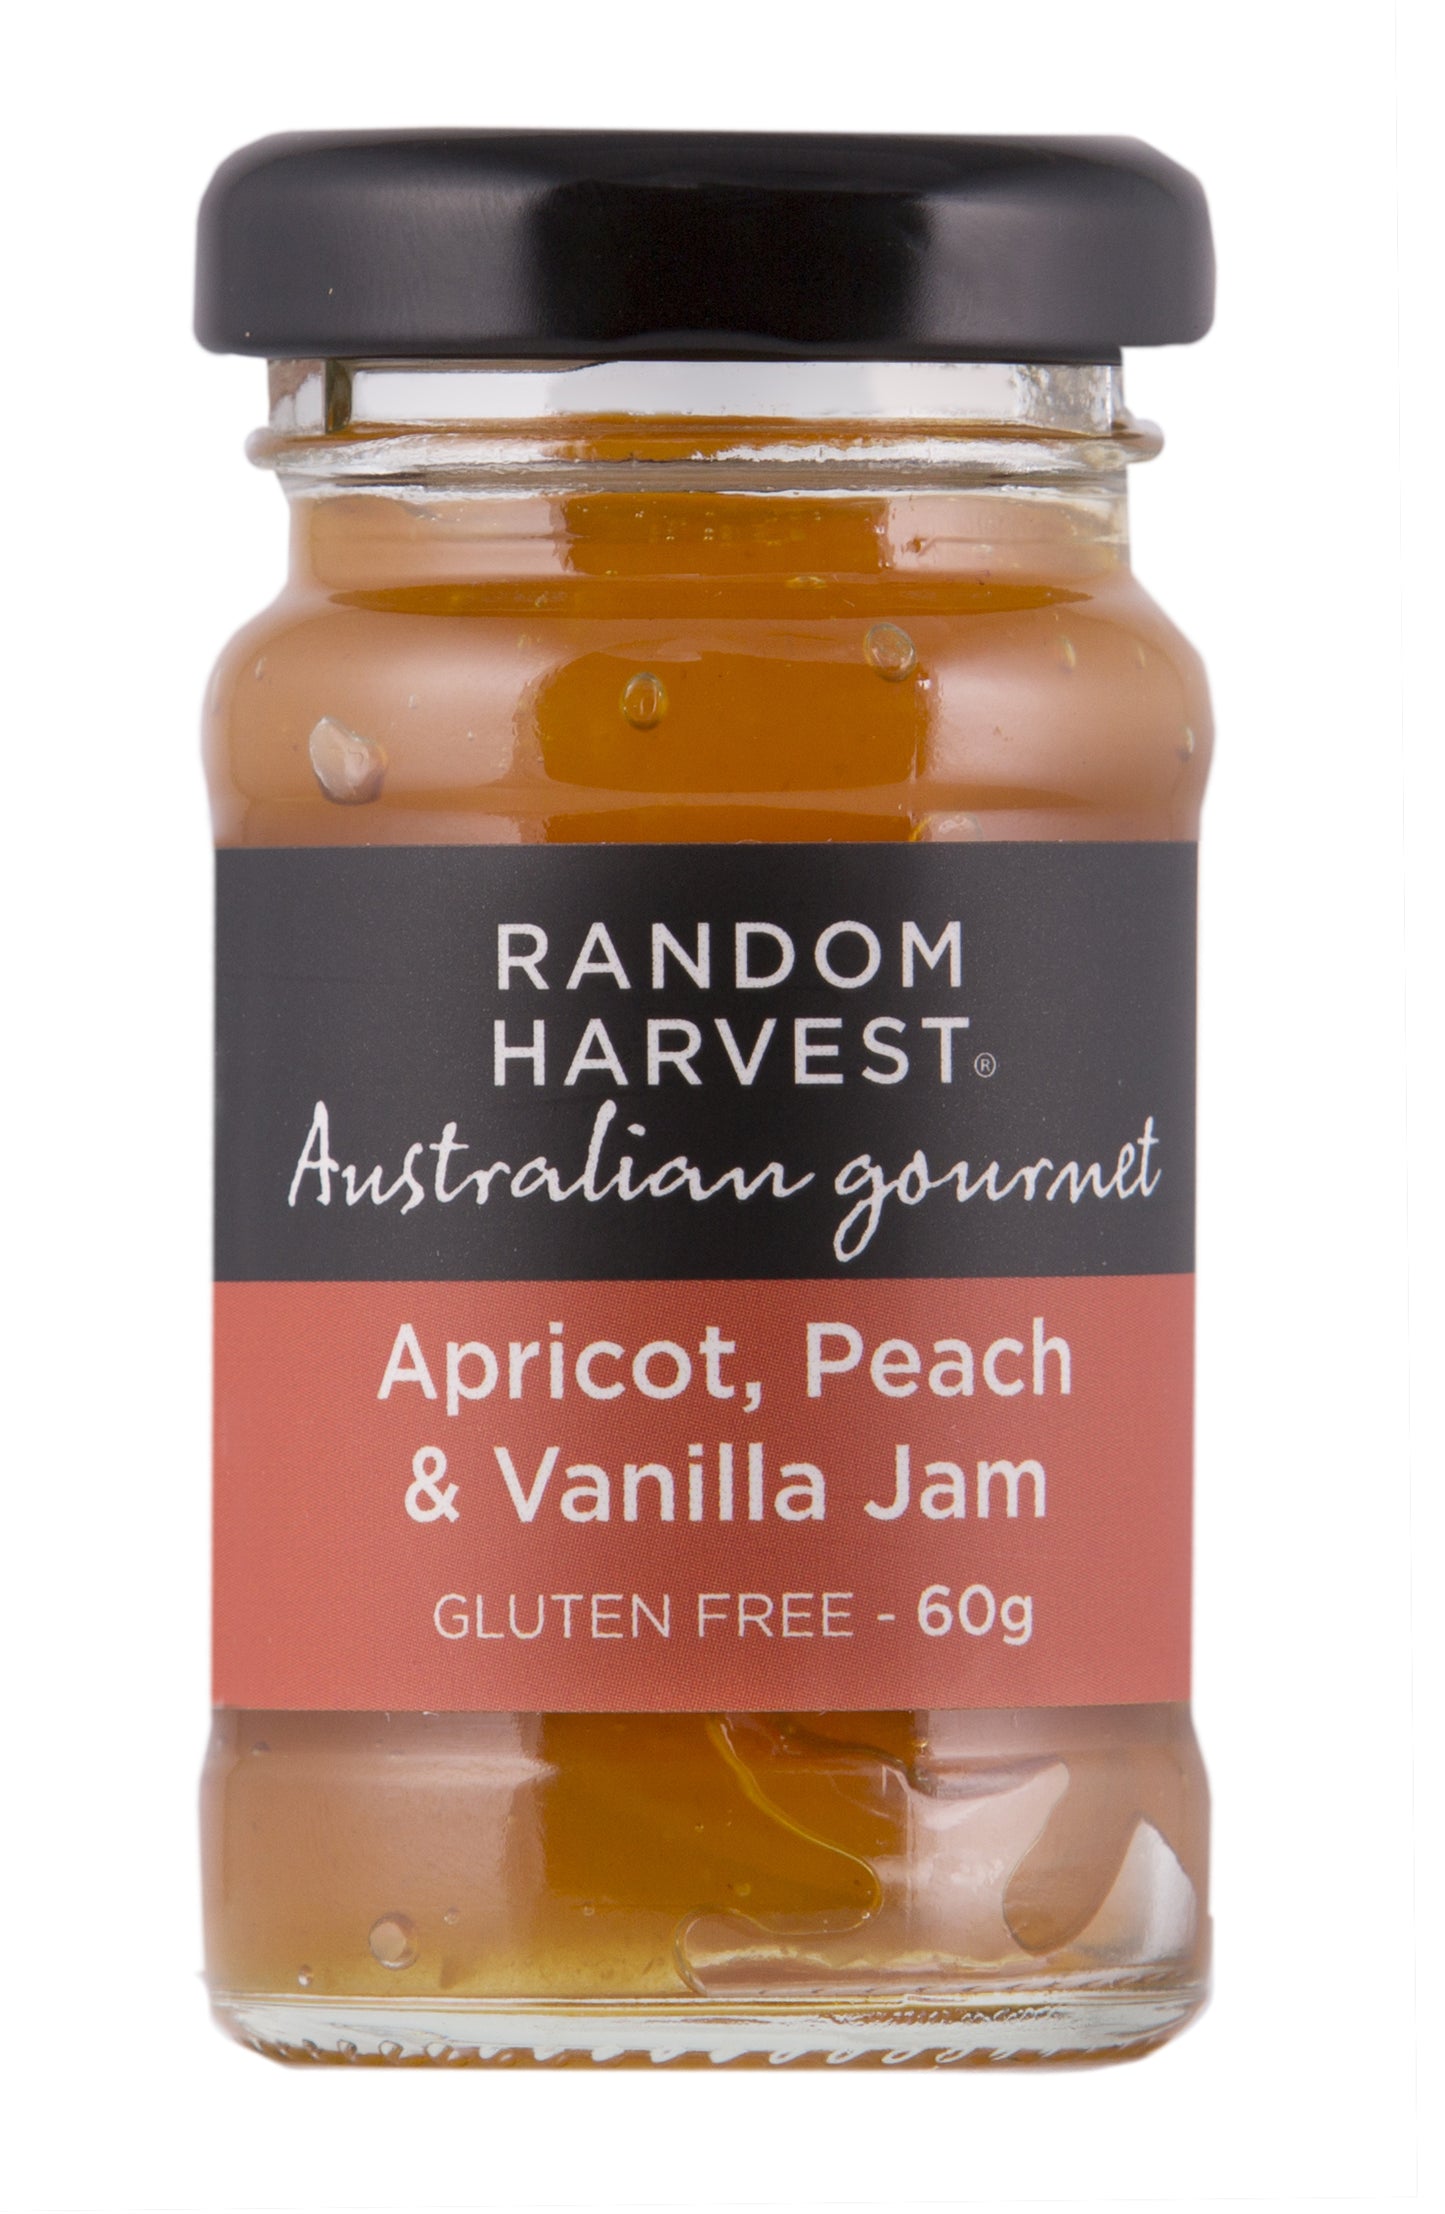 Apricot, Peach & Vanilla Jam - Random Harvest